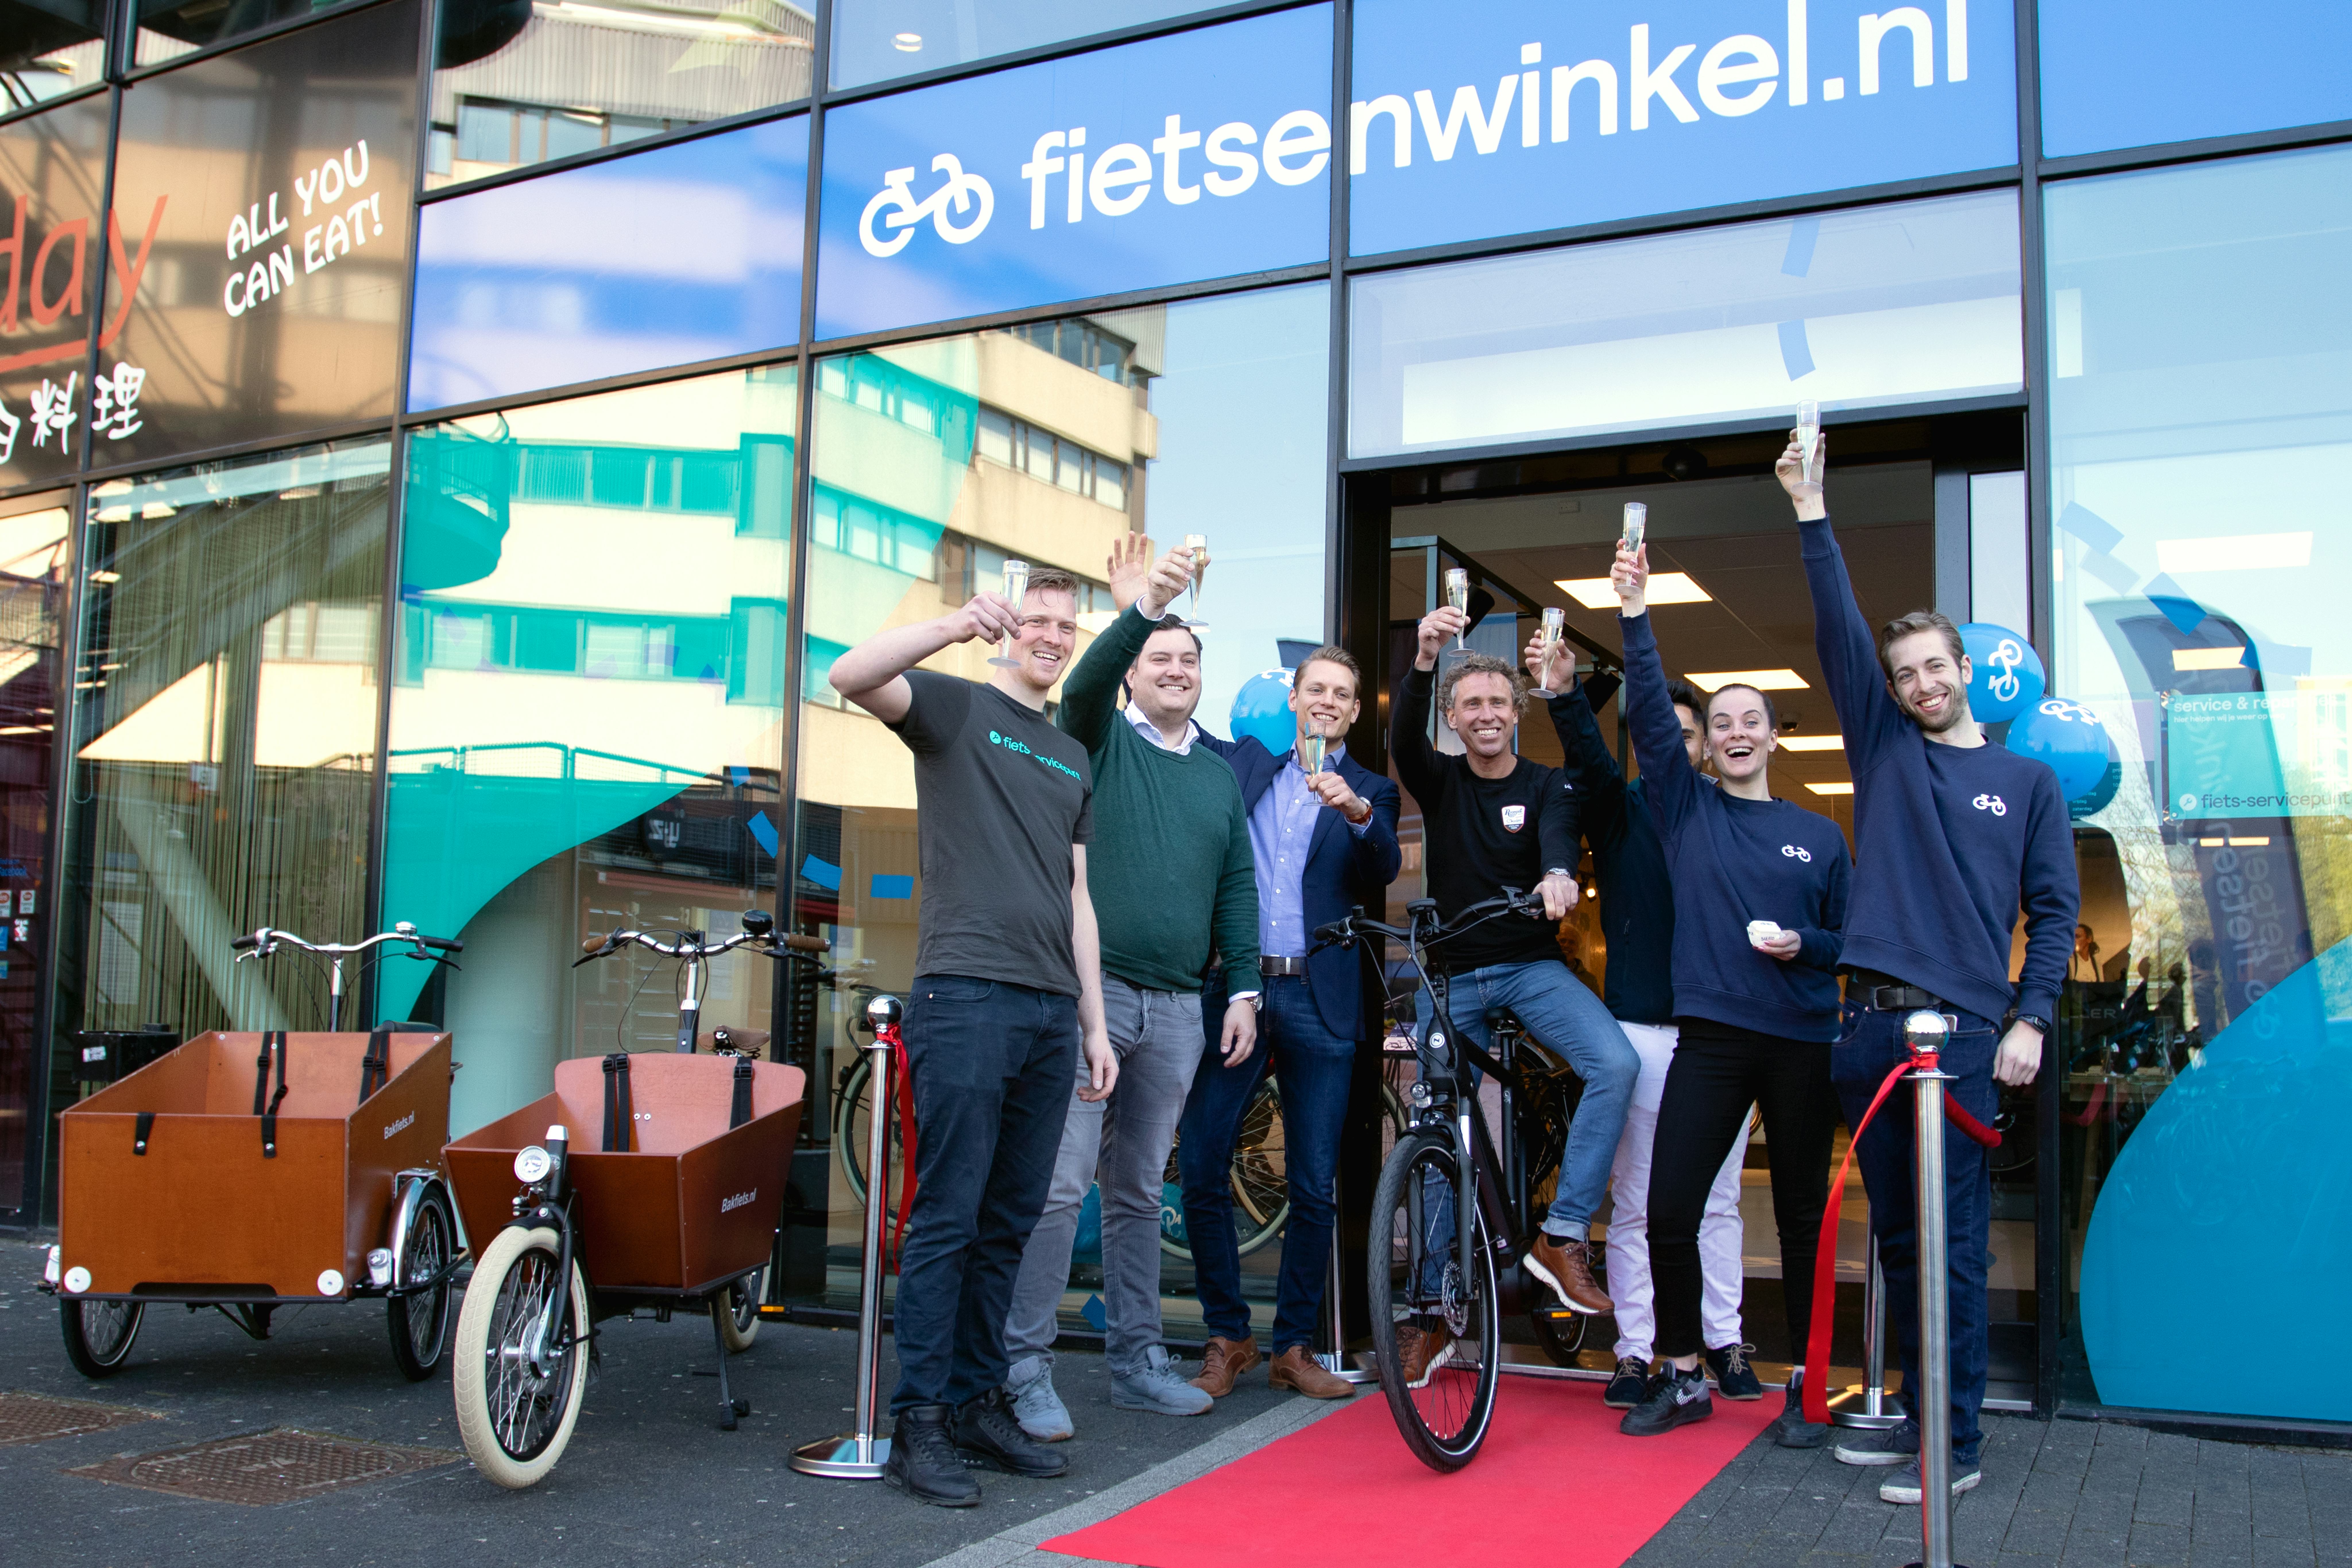 fietsenwinkel.nl opening utrecht